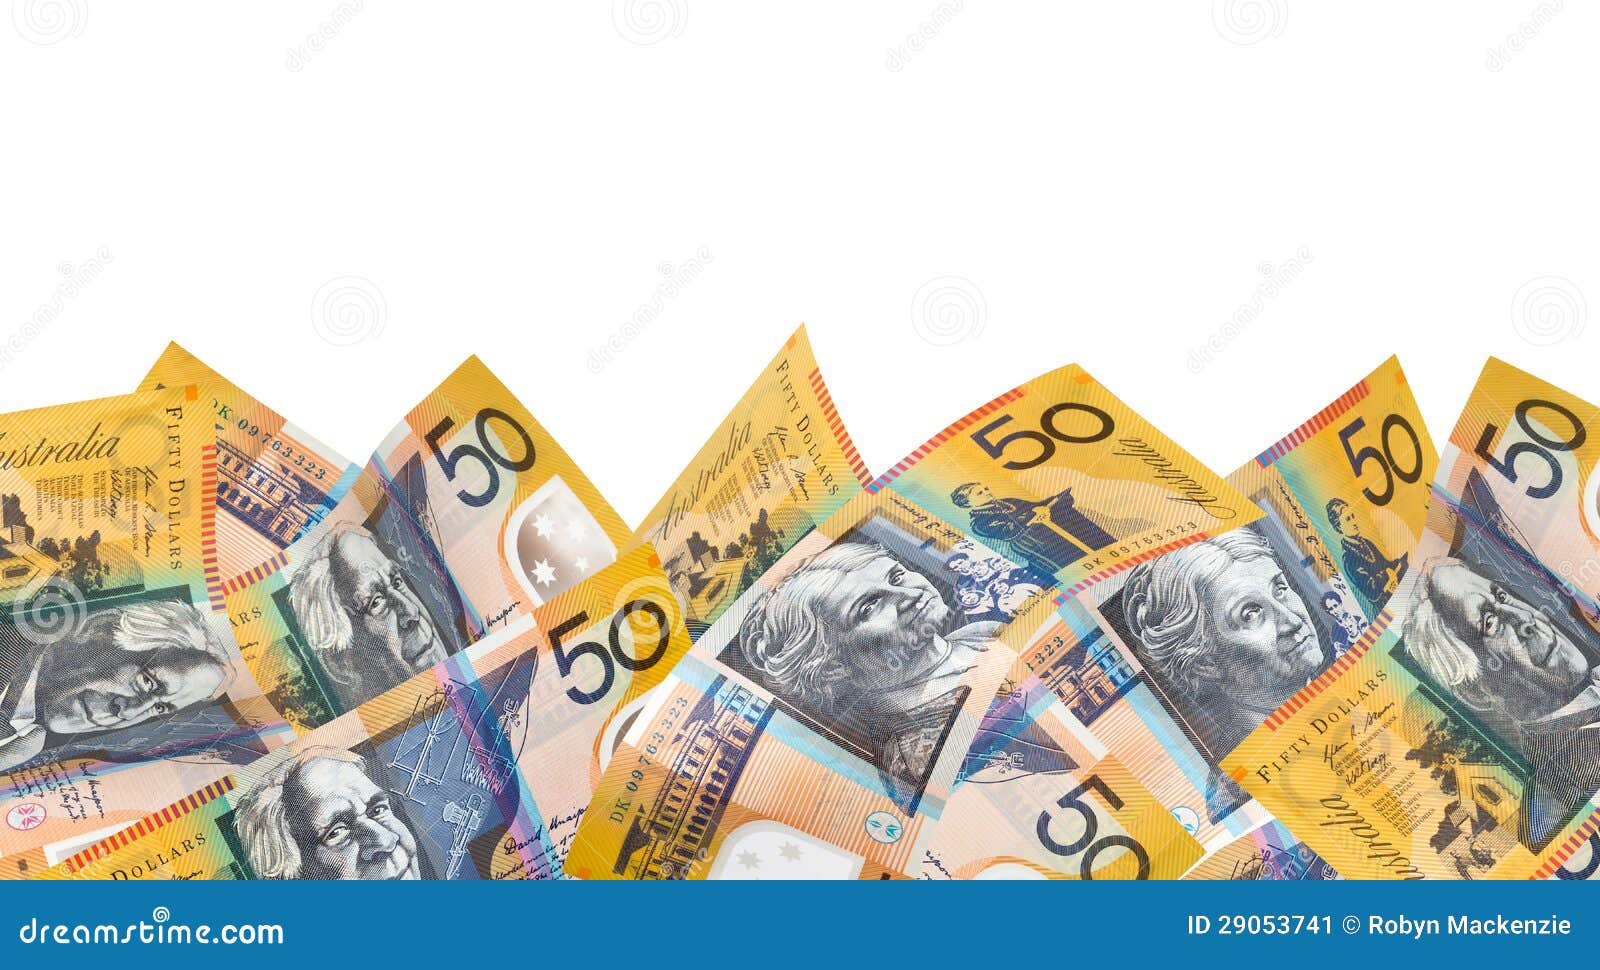 clipart australian money - photo #5